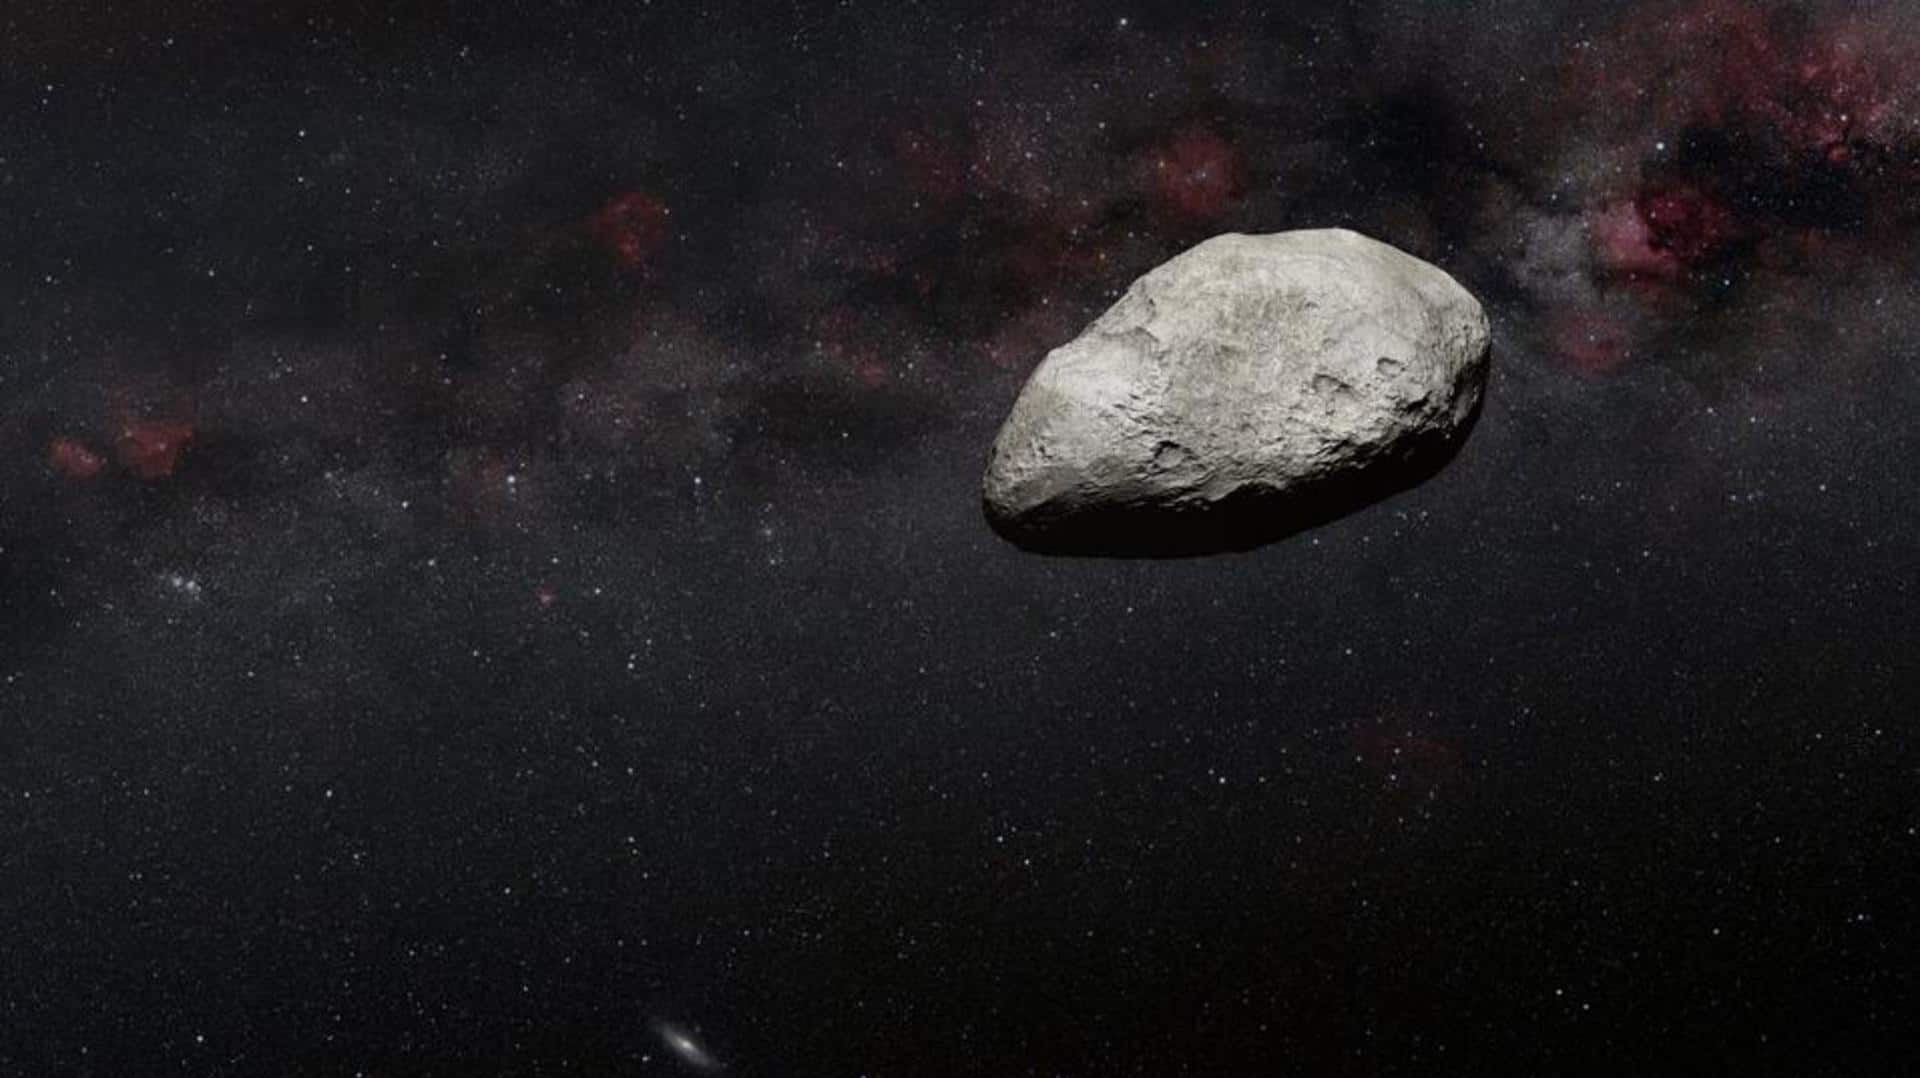 NASA's James Webb telescope "serendipitously" spots extremely small main-belt asteroid